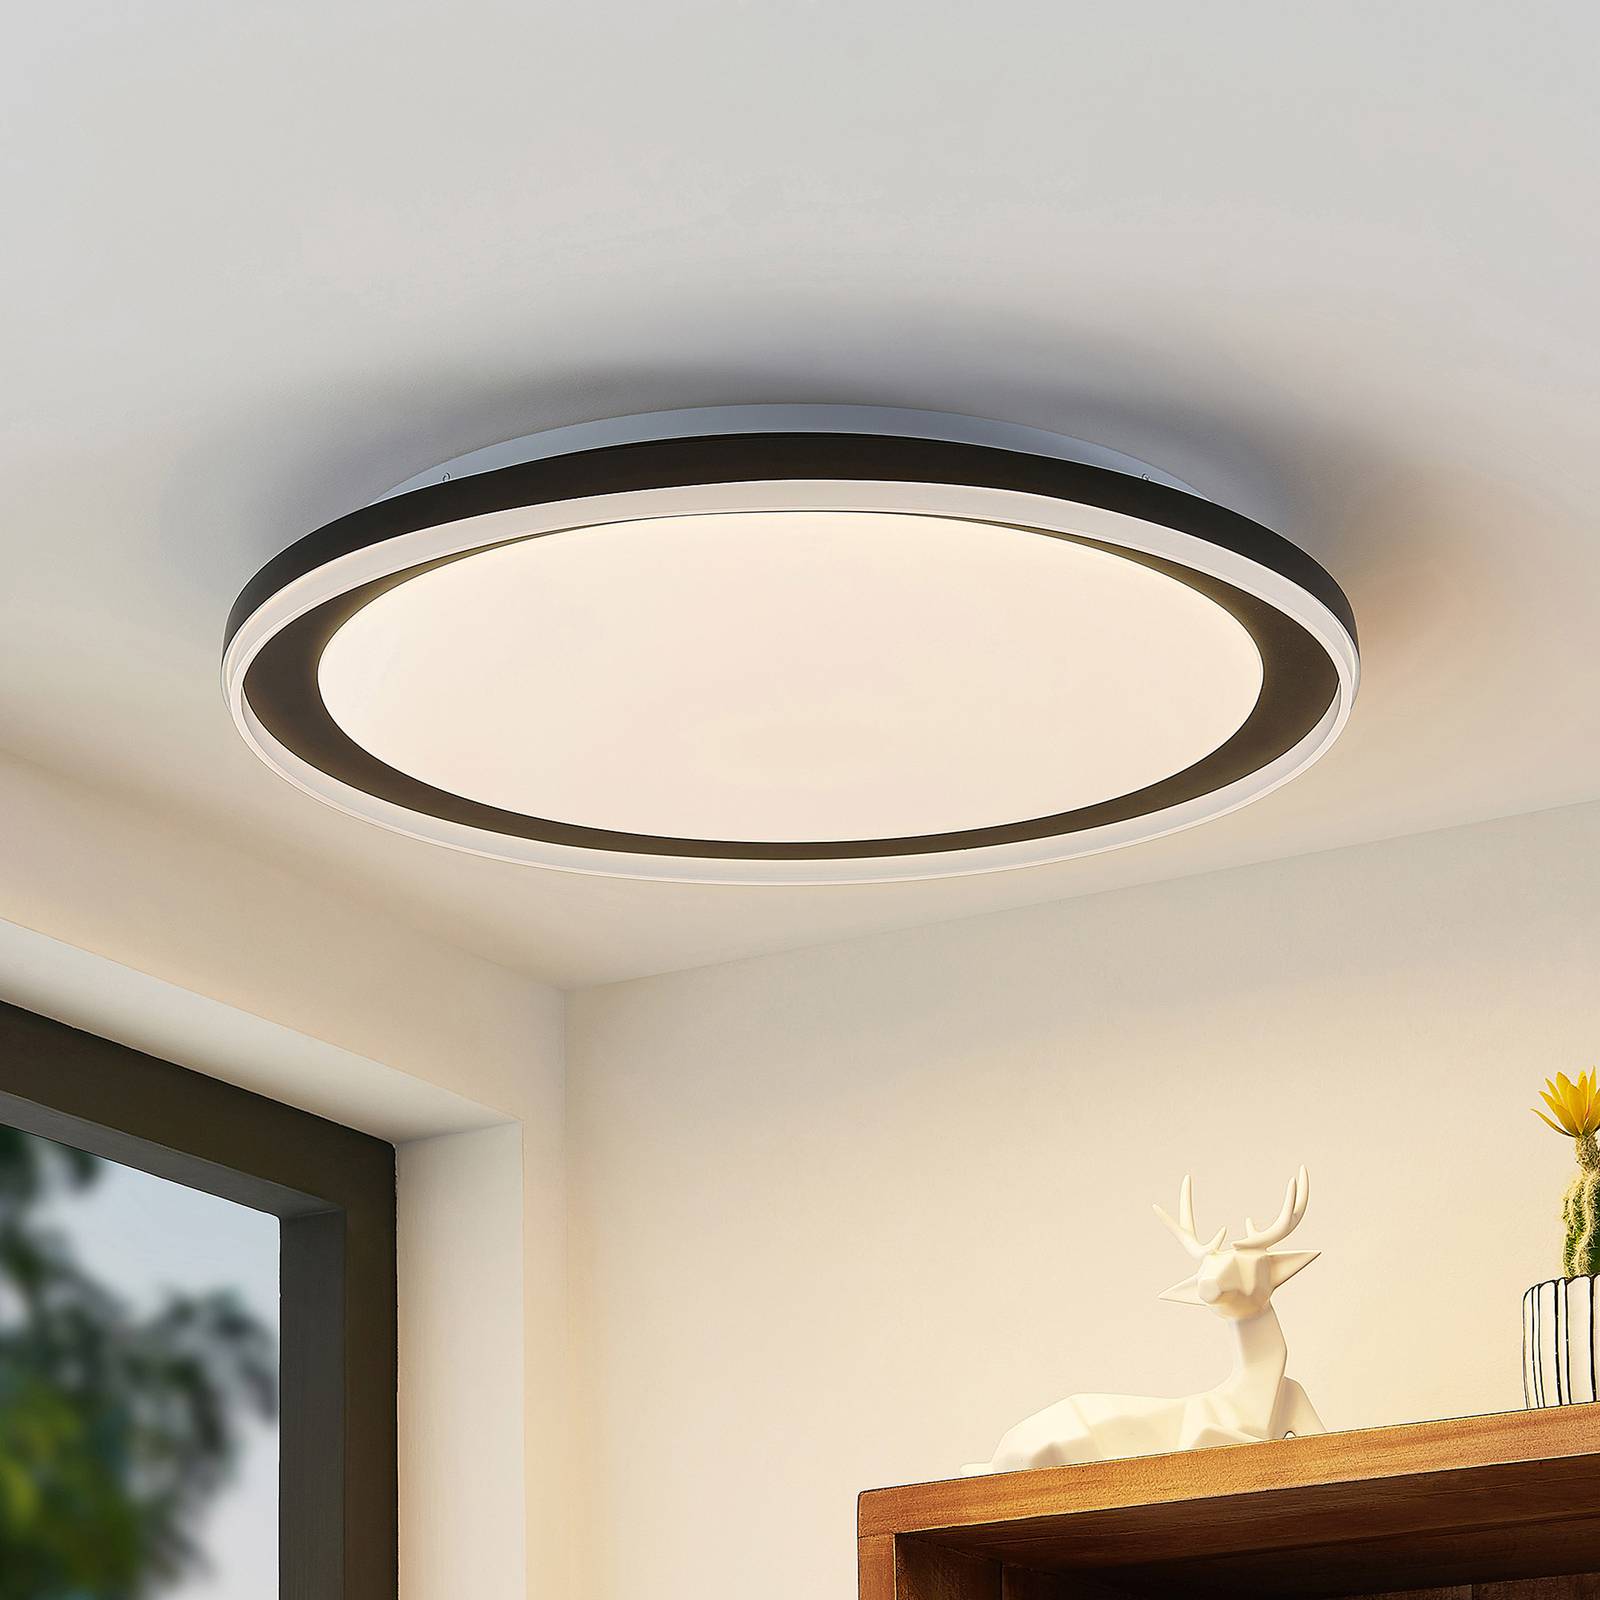 Lindby Verdan LED ceiling light, CCT, dimmable | Lights.co.uk